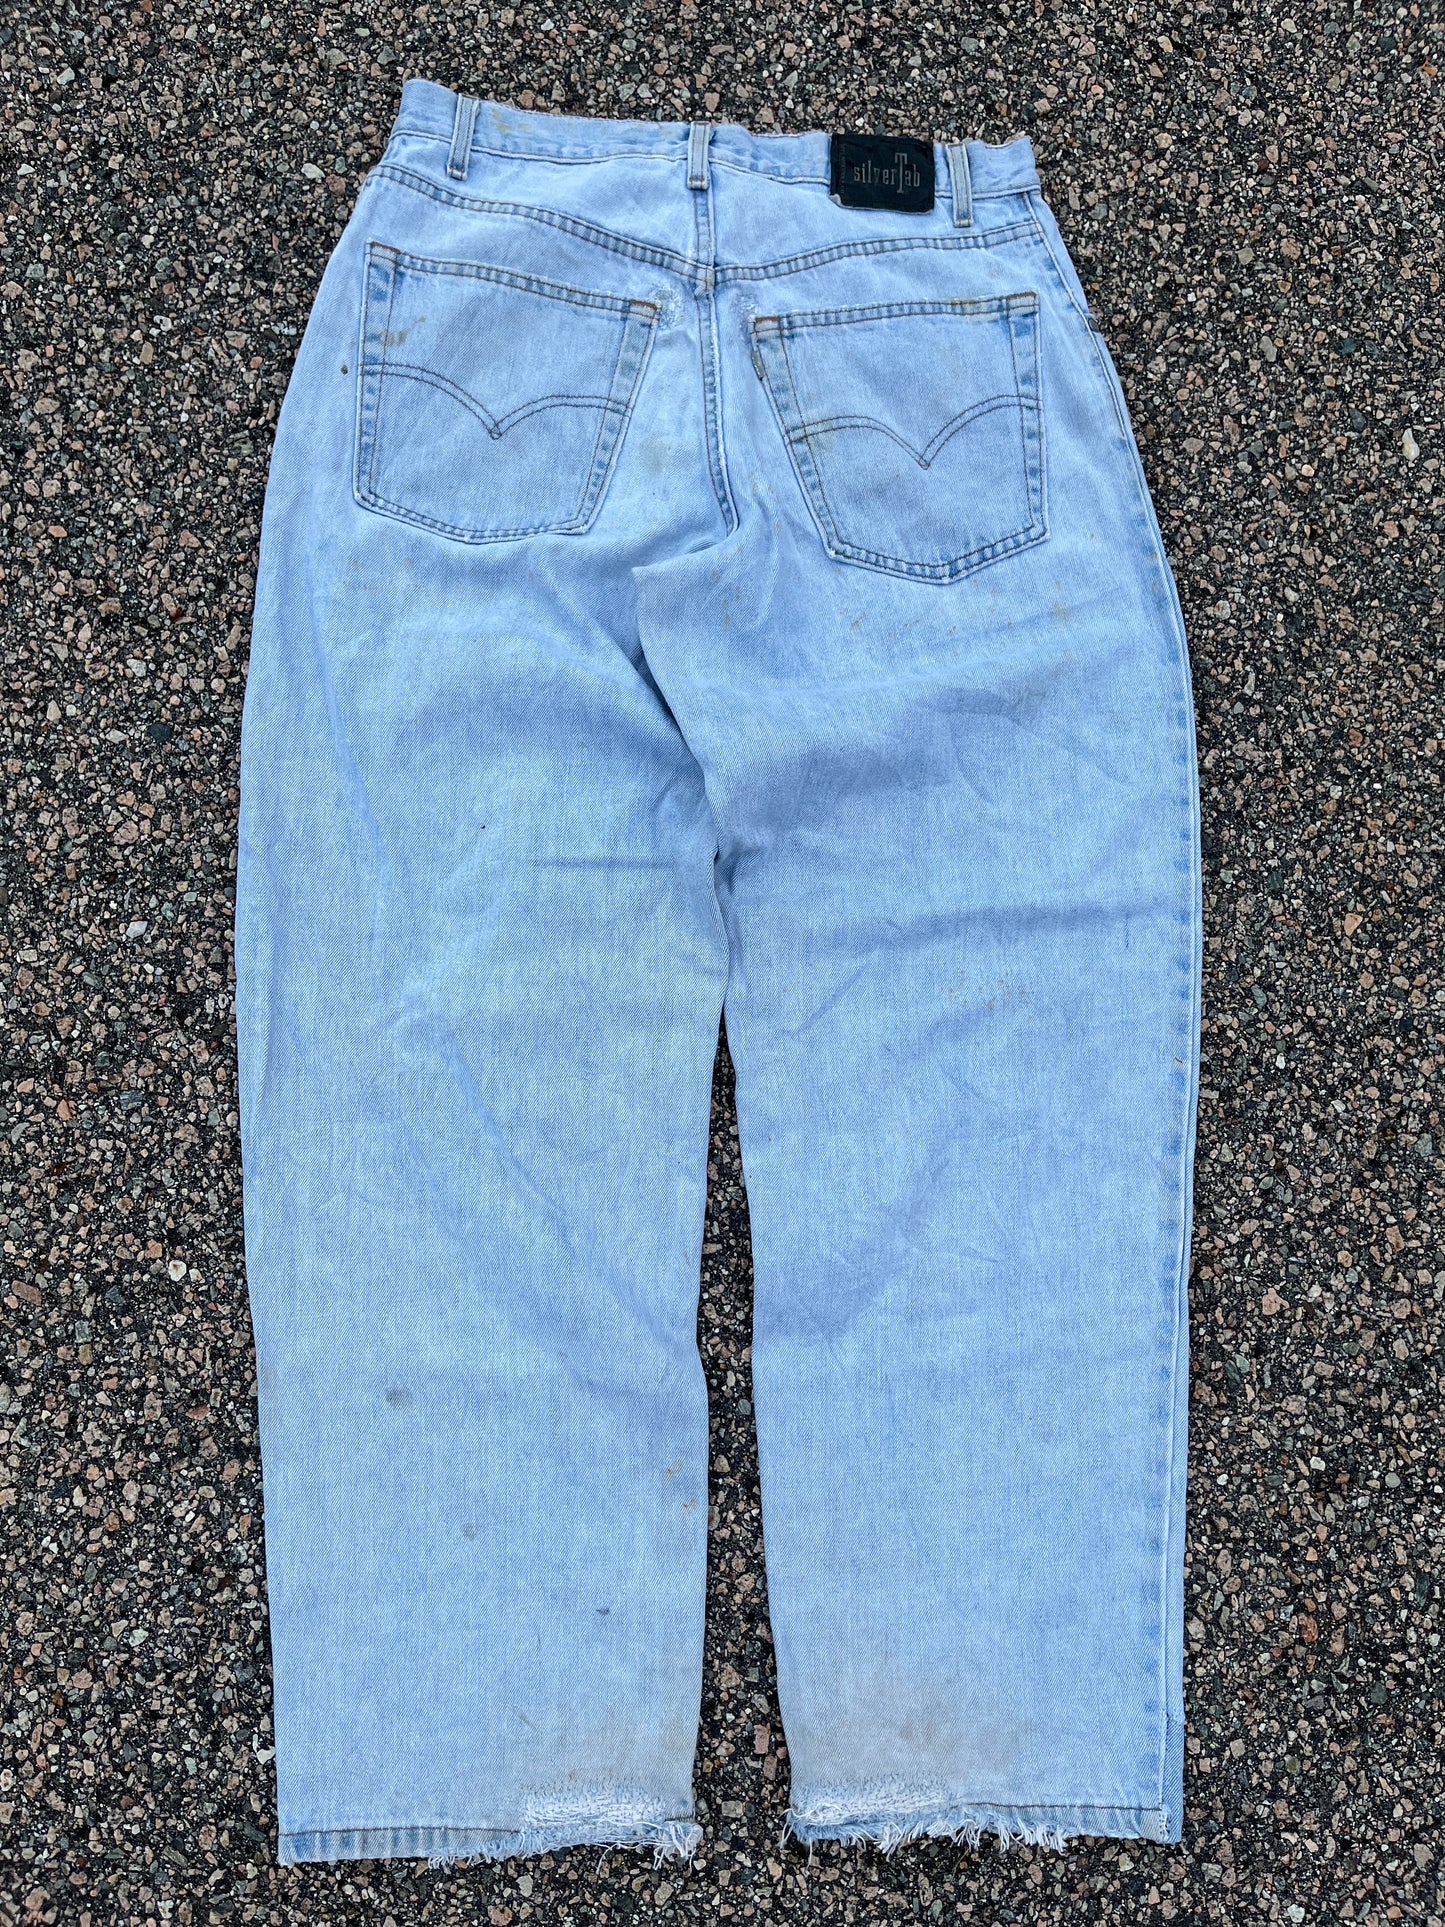 Levi’s 570 Silvertab Faded Denim Baggy Fit Pants - 33 x 31.5